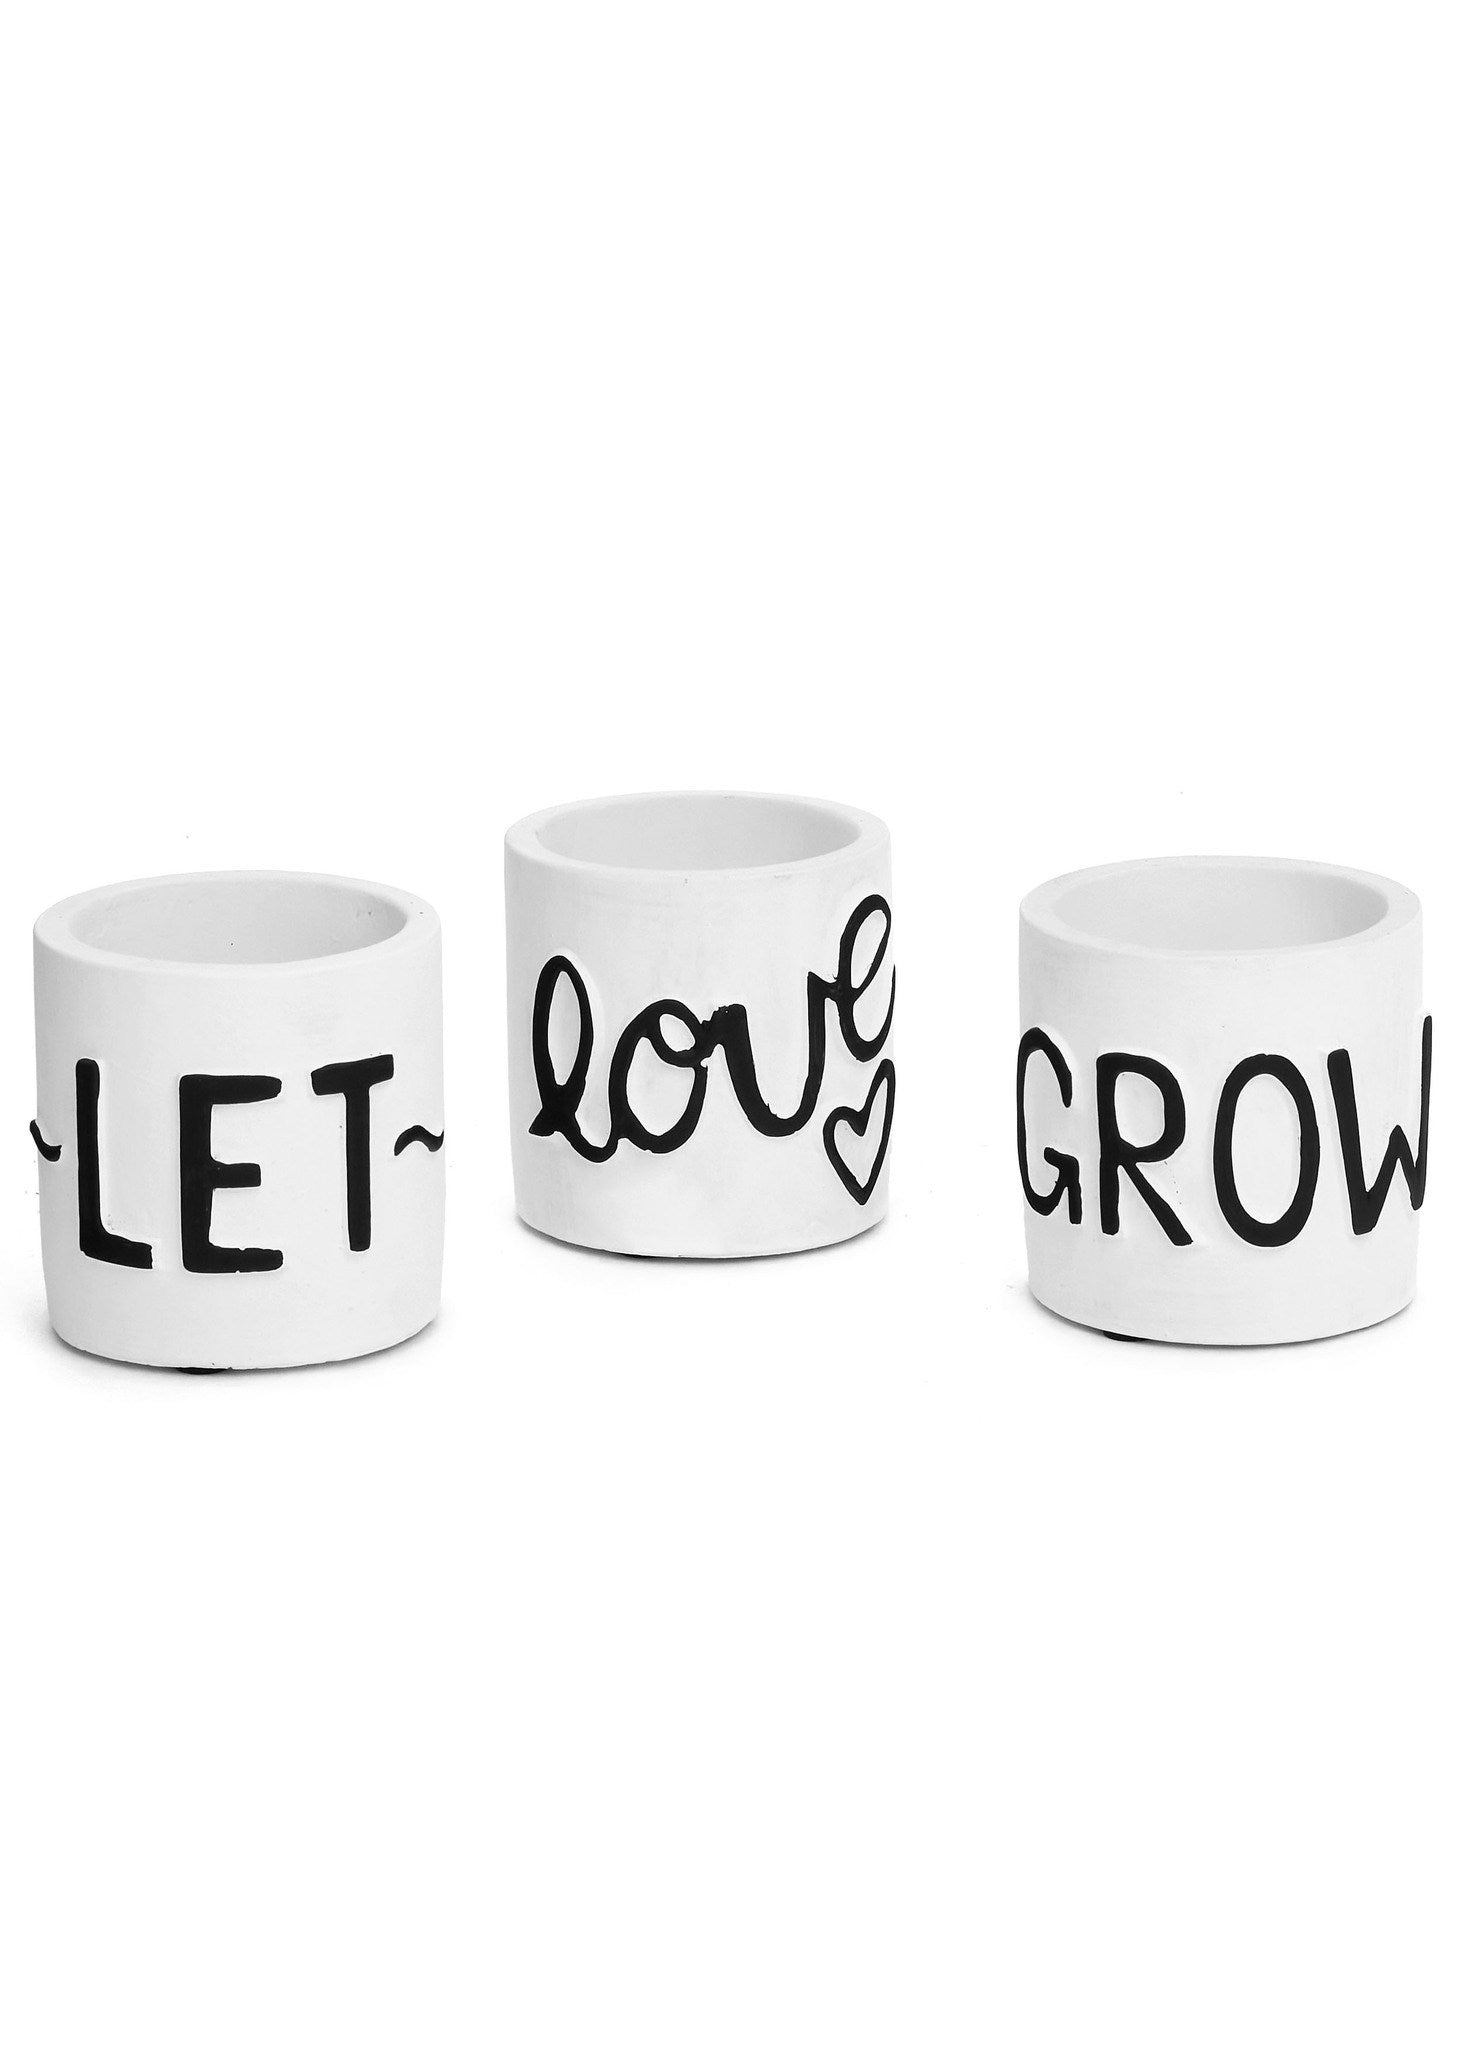 LET, LOVE, GROW Mini Planter Set